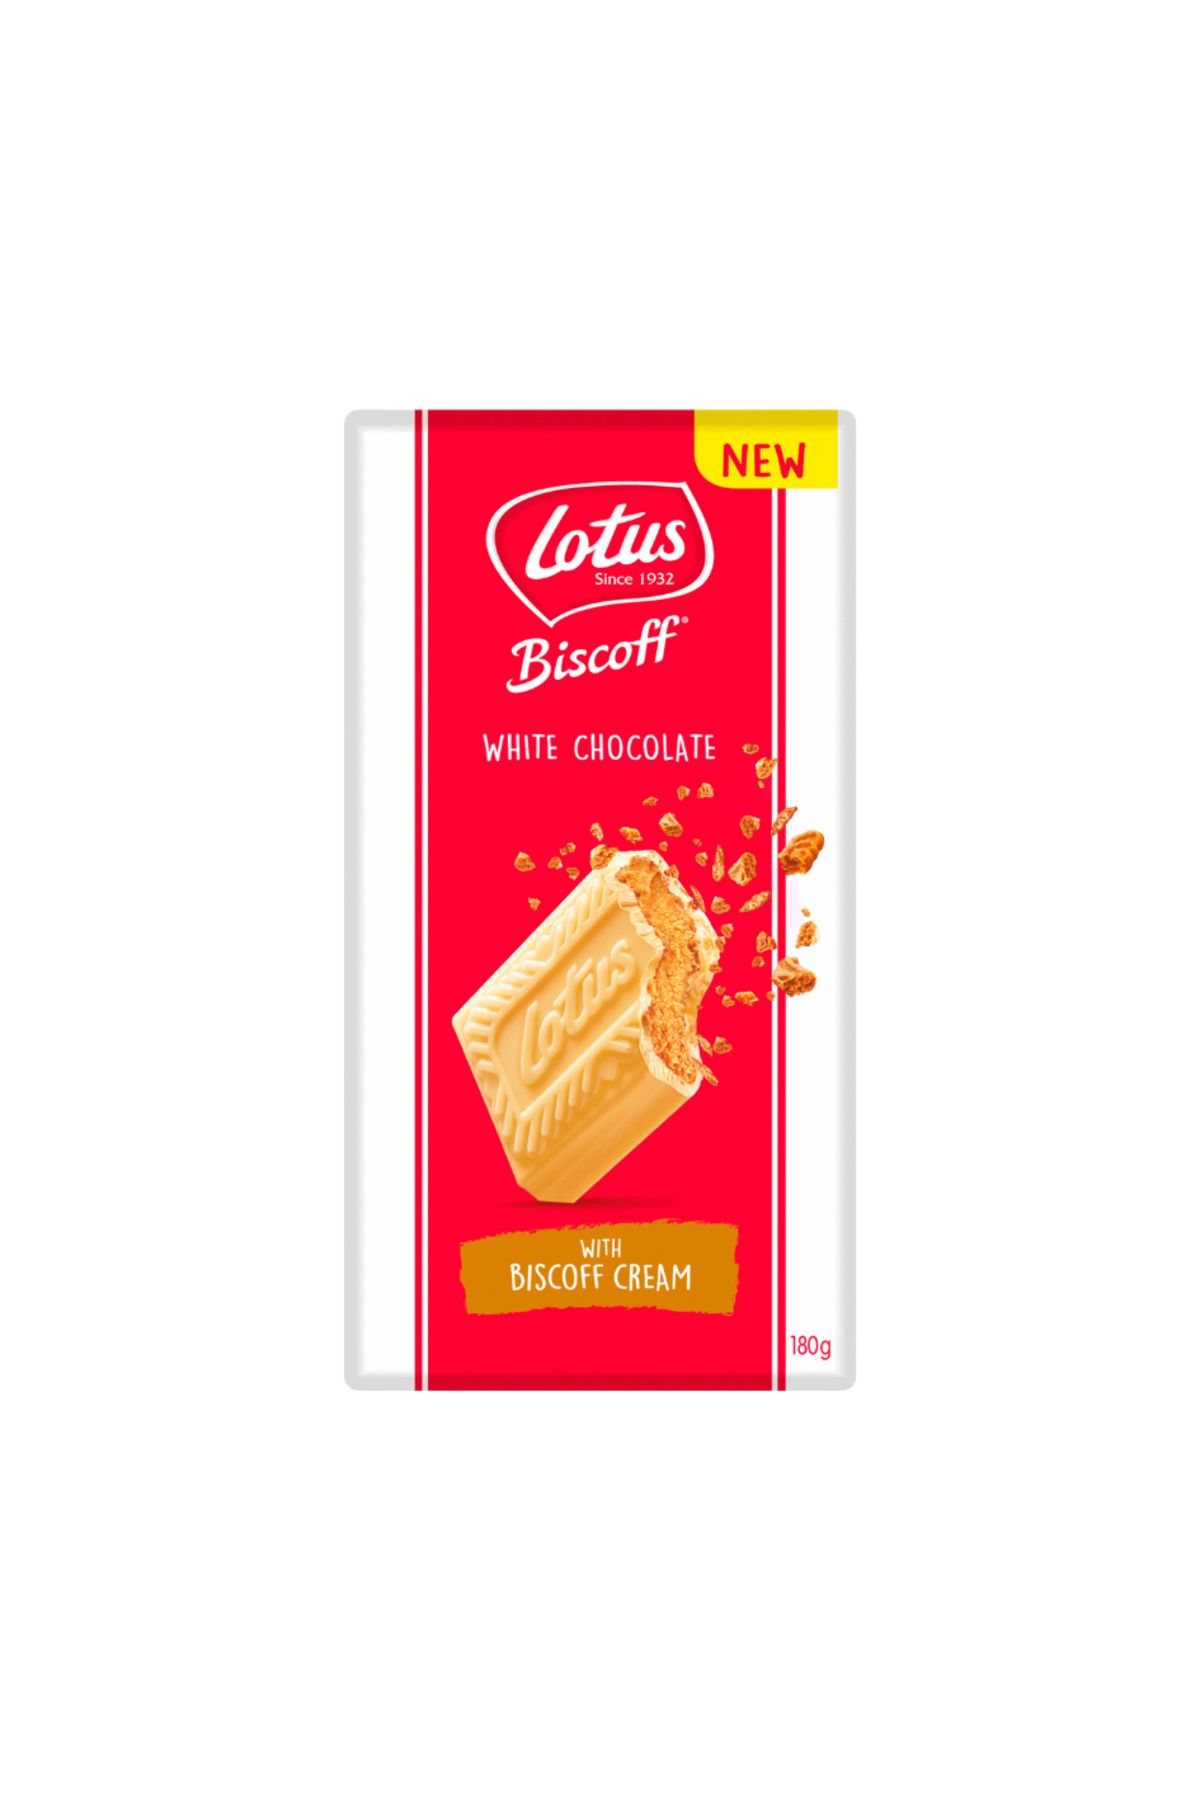 Lotus Biscoff White Chocolate with Biscoff Cream 180g